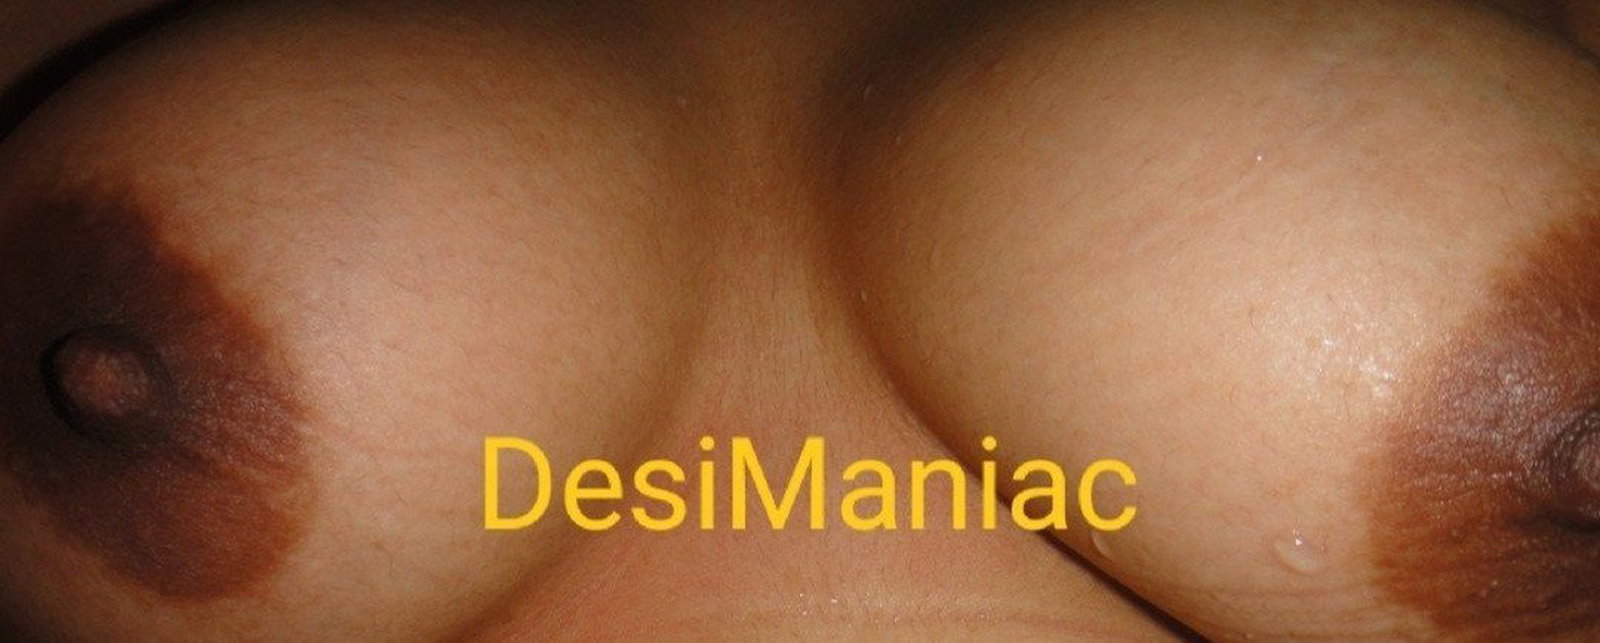 Cover photo of DesiManiac01